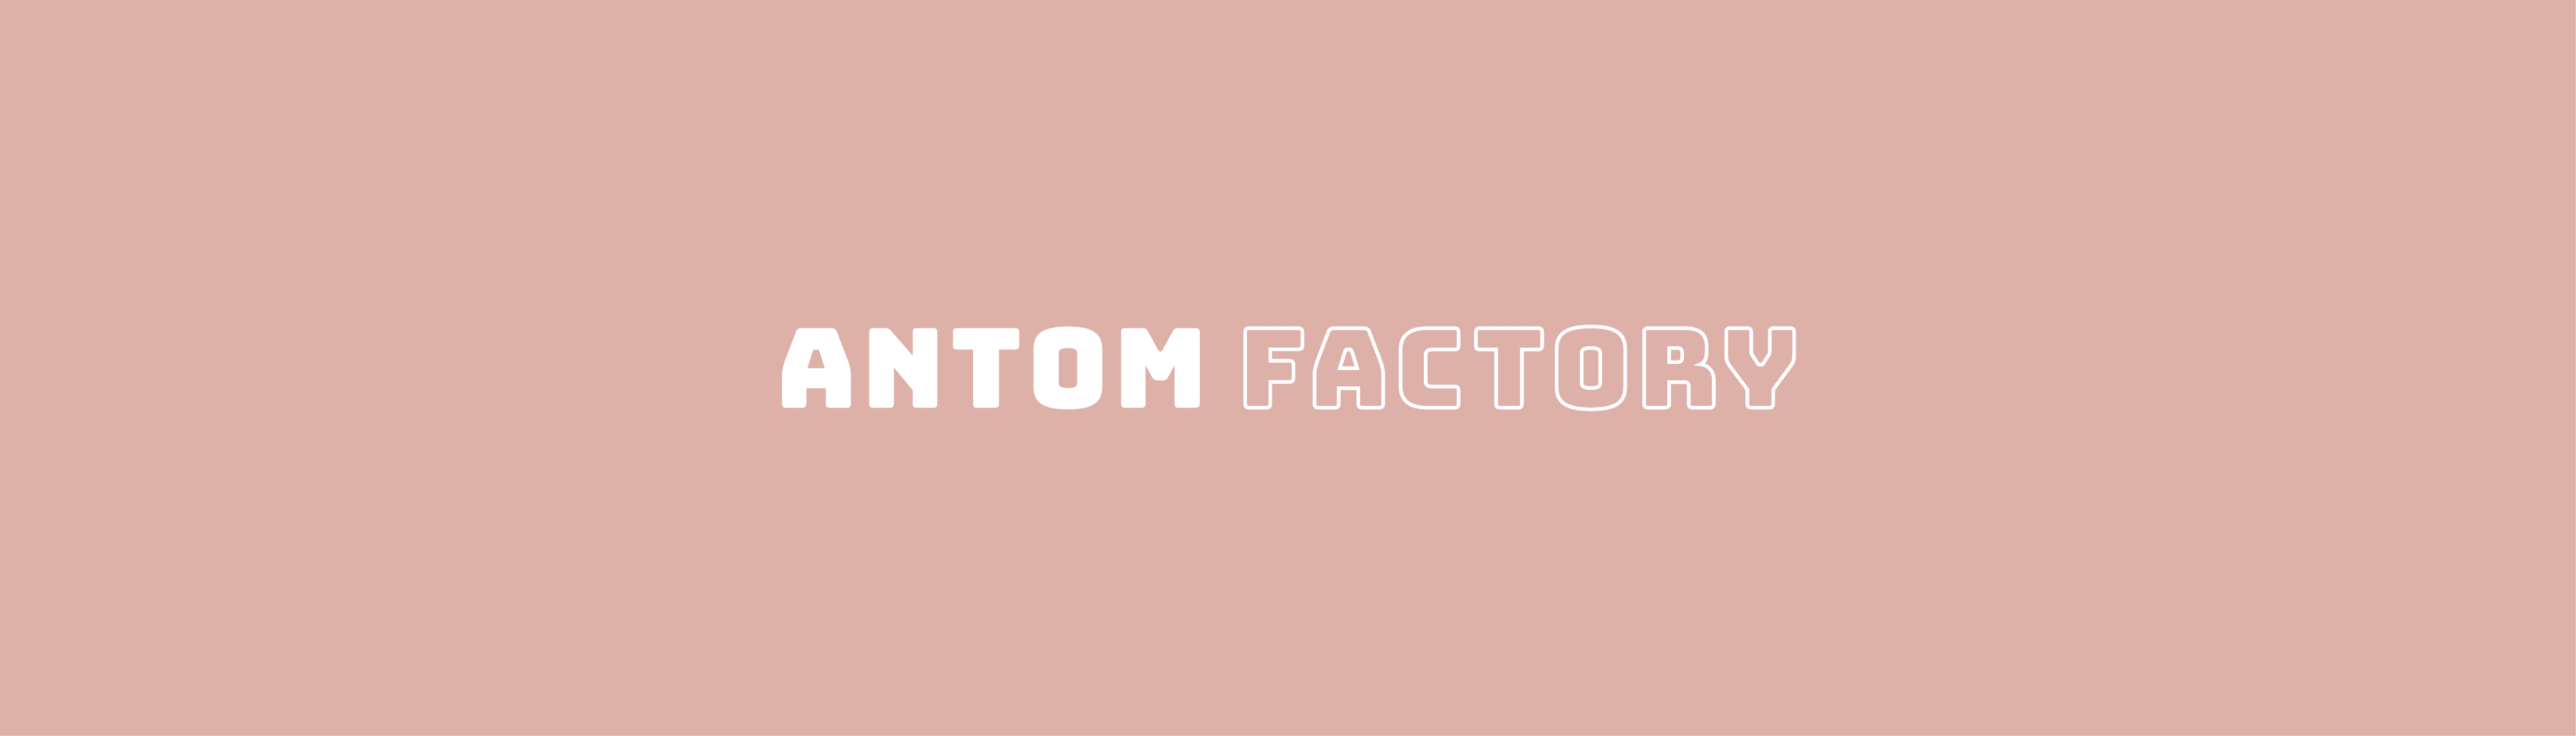 Antom_Factory 横幅